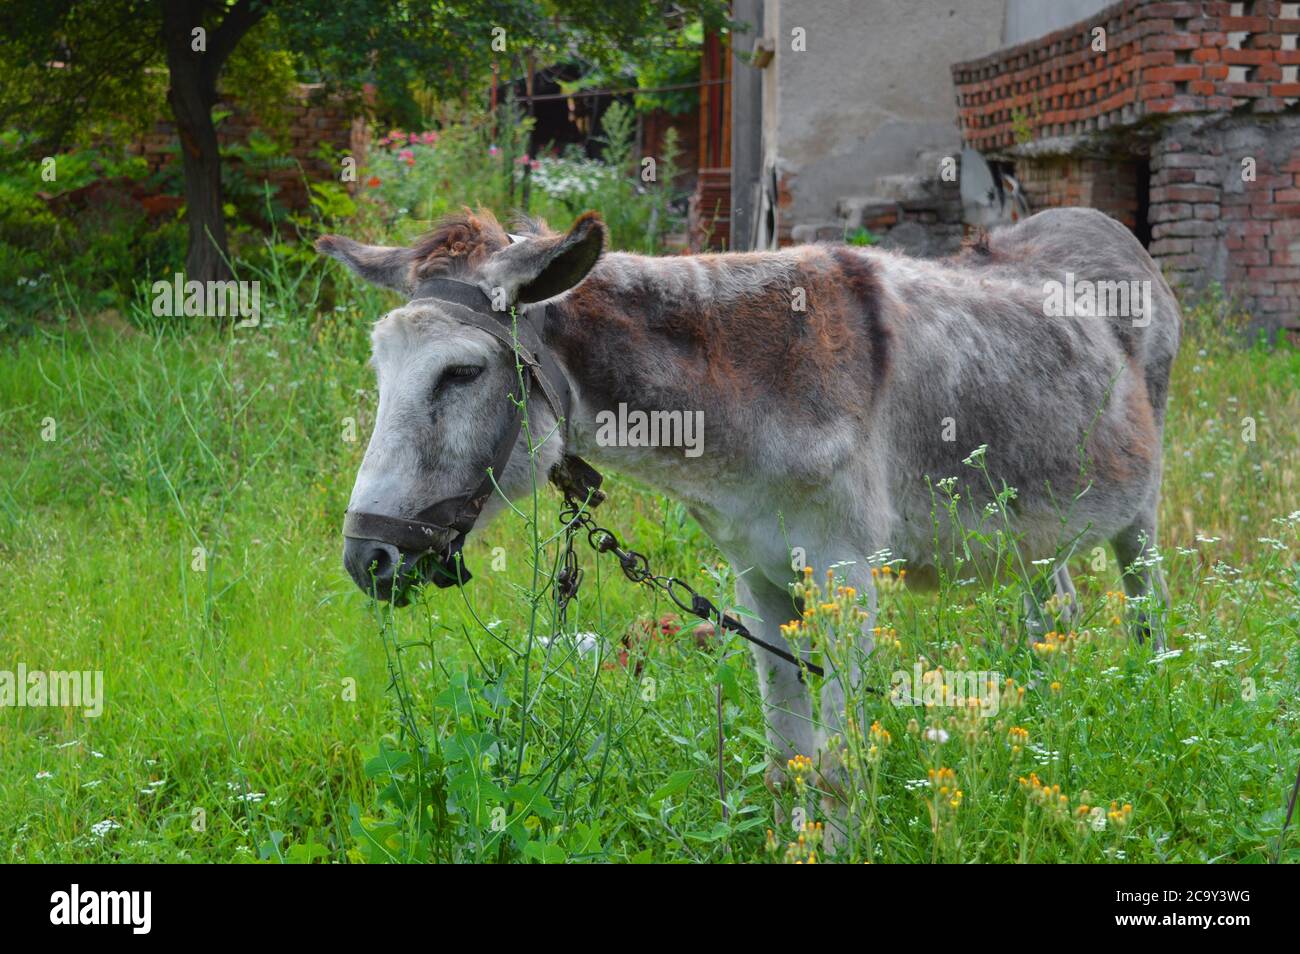 Donkey in the farmyard around tall green grass. Stock Photo